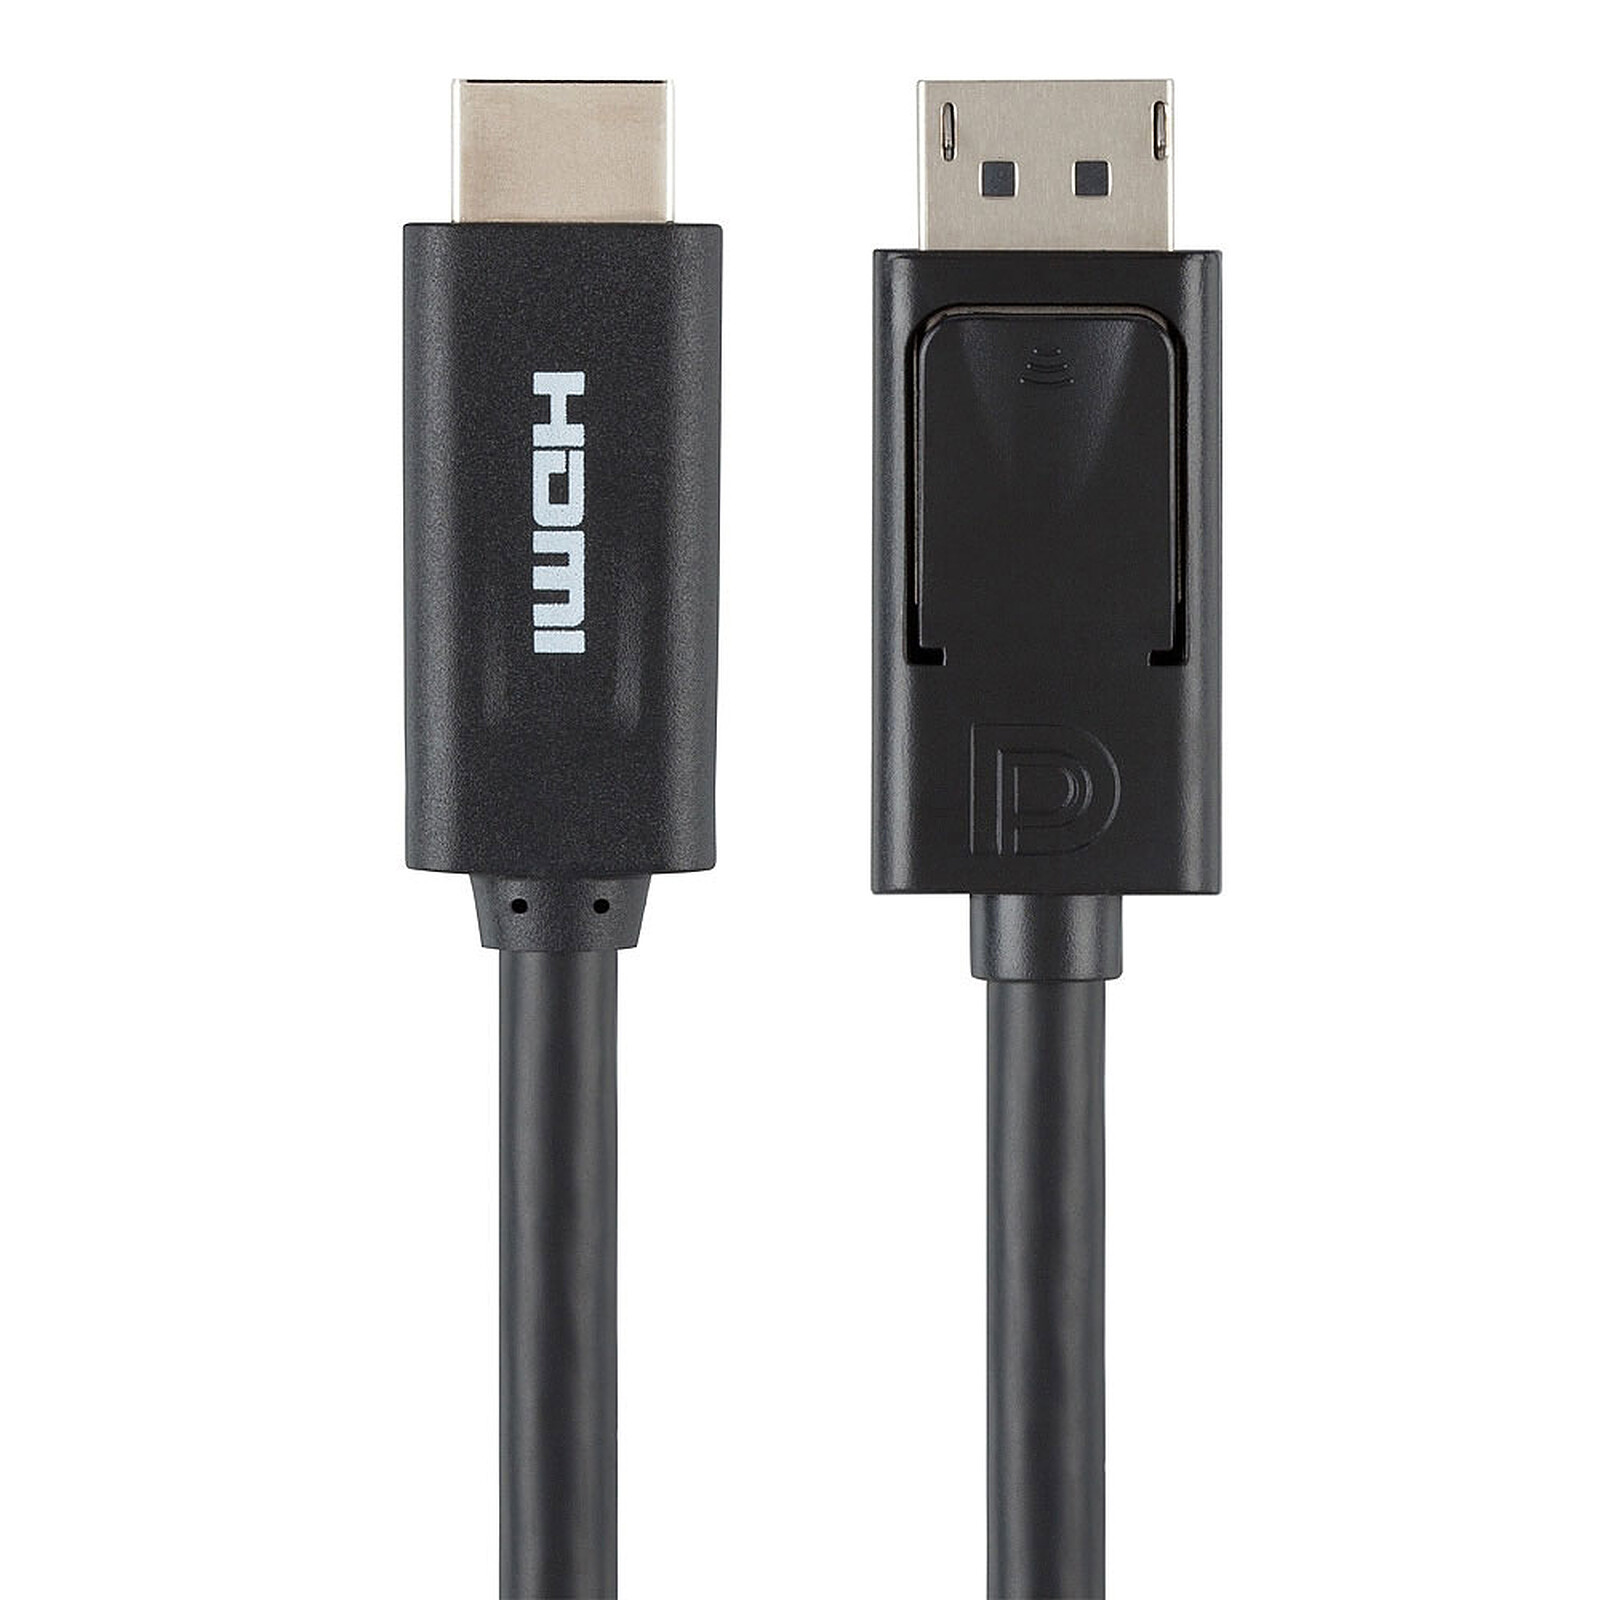 Real Cable HDMI-1 (2m) - HDMI - Garantie 3 ans LDLC